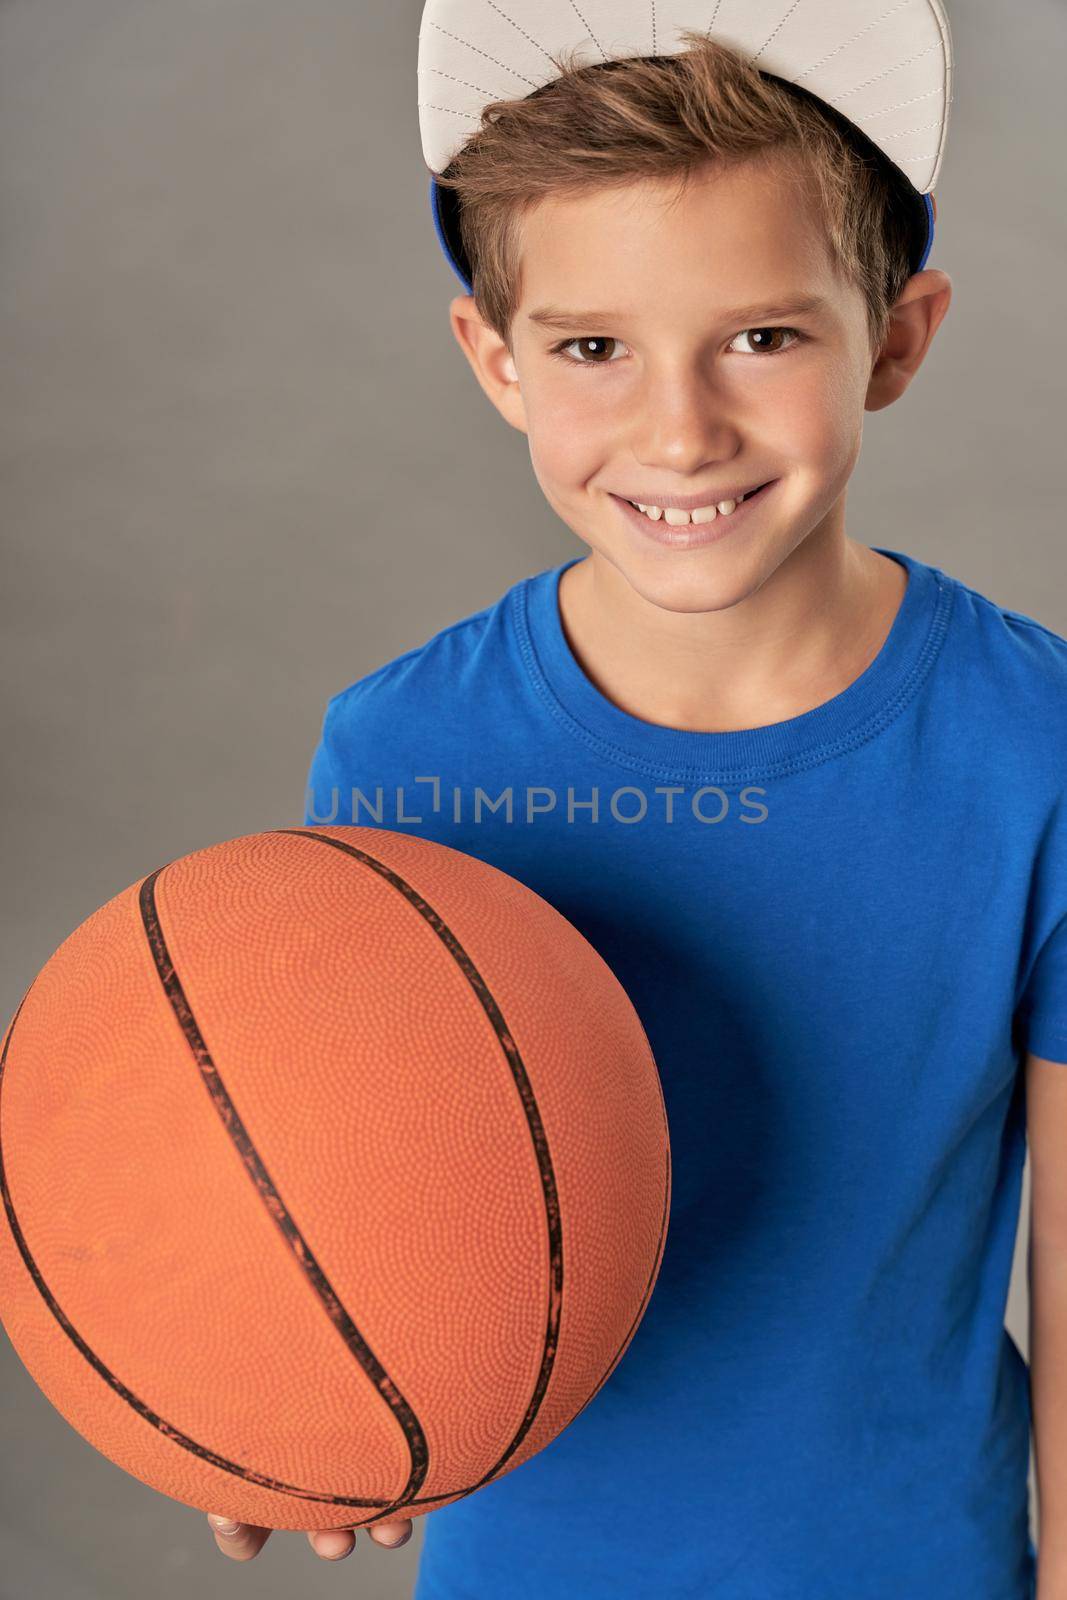 Joyful male child in blue shirt holding basketball ball by friendsstock